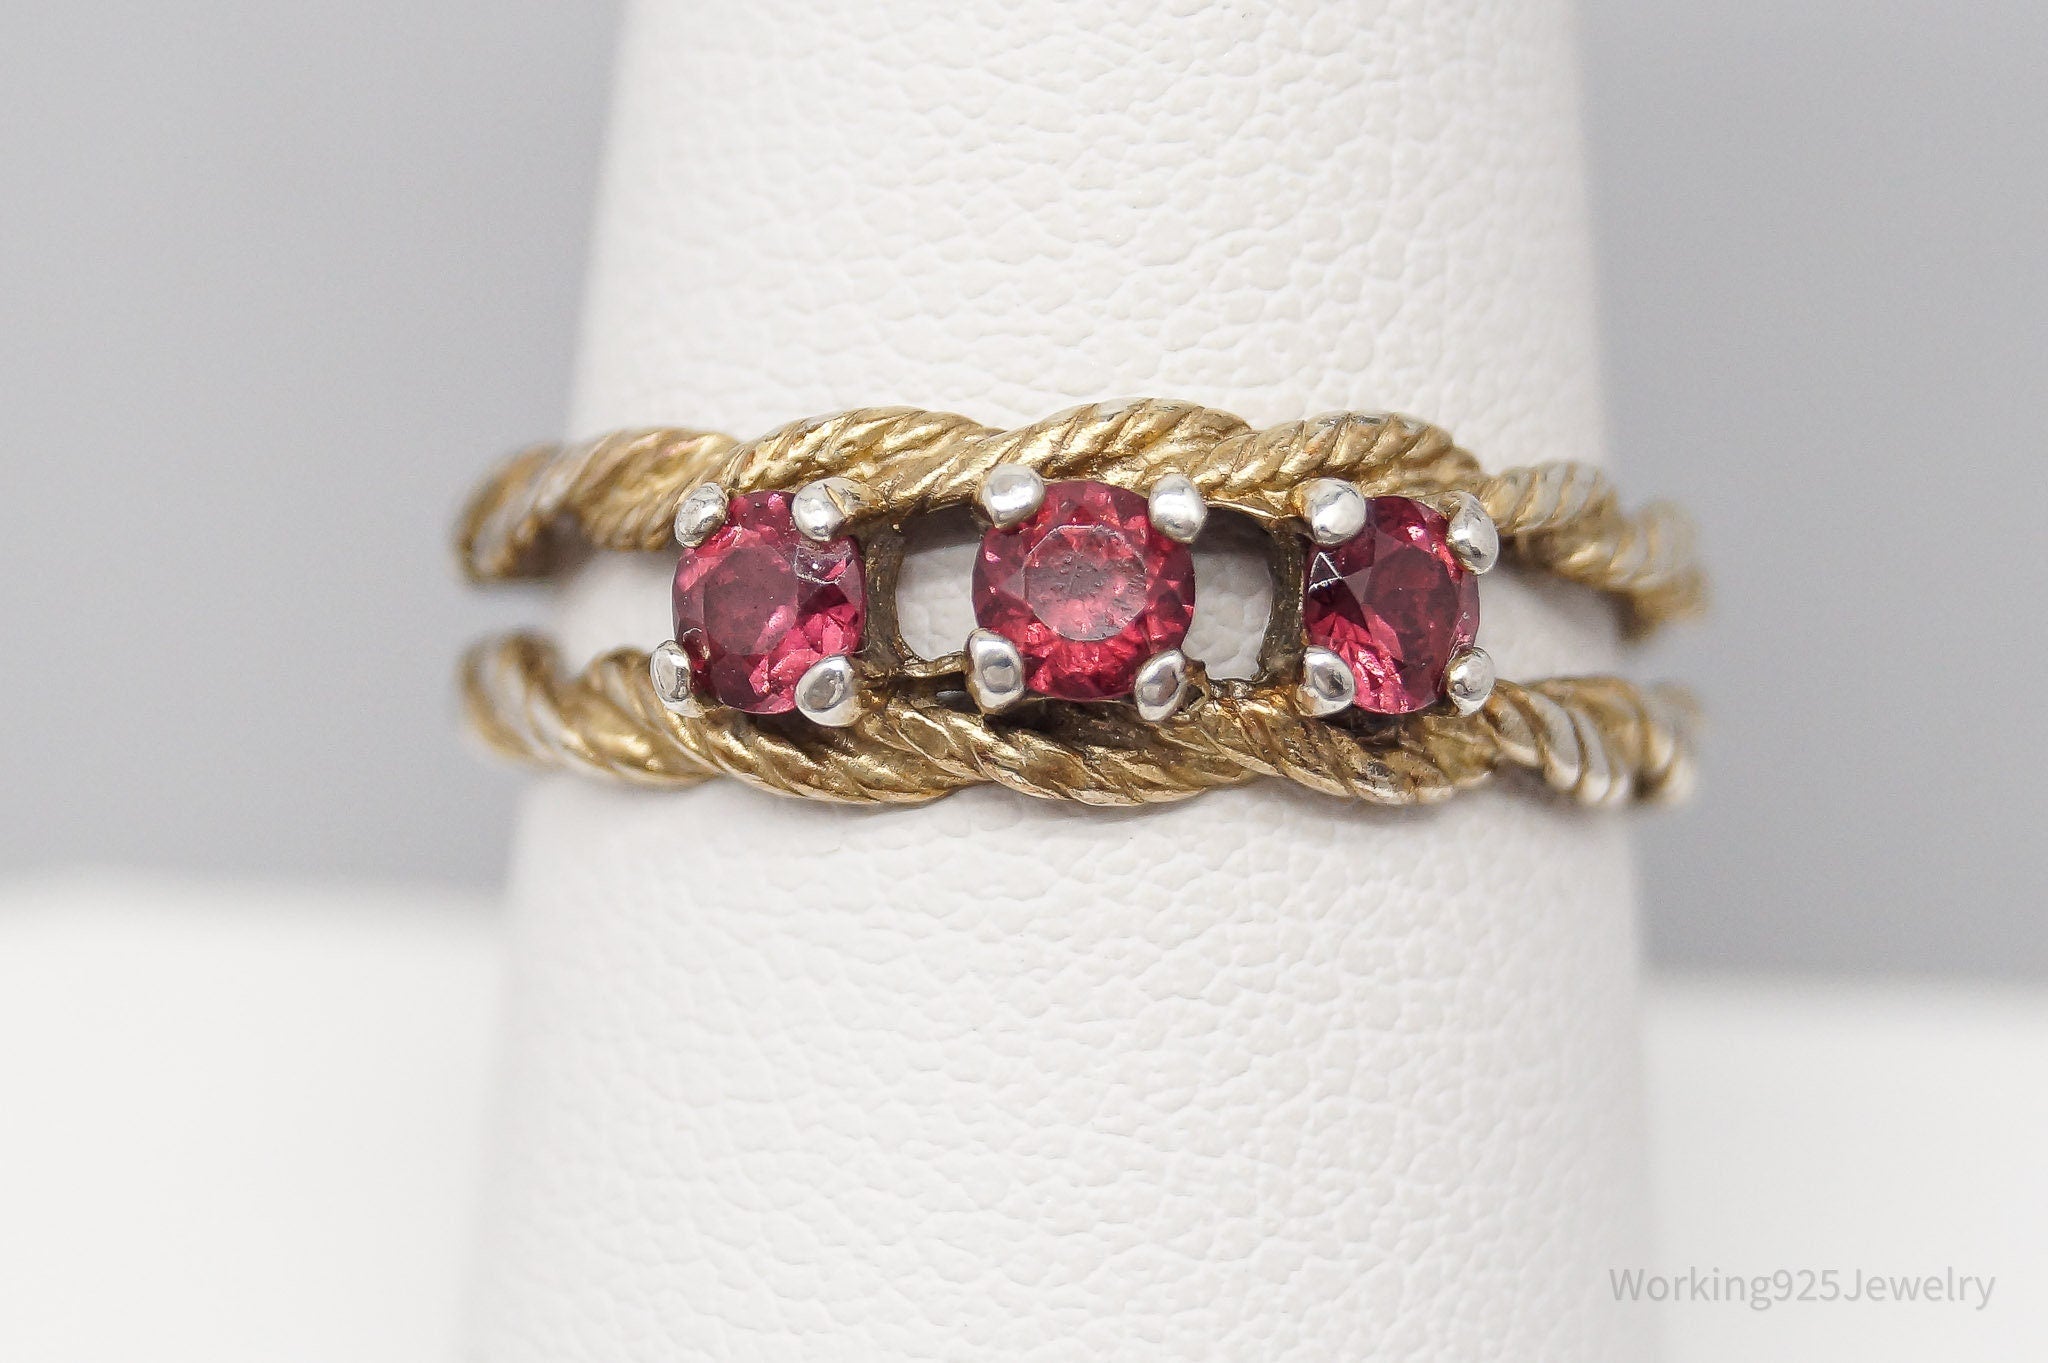 Vintage Deep Pink Tourmaline Gold Washed Sterling Silver Ring - Size 8.25